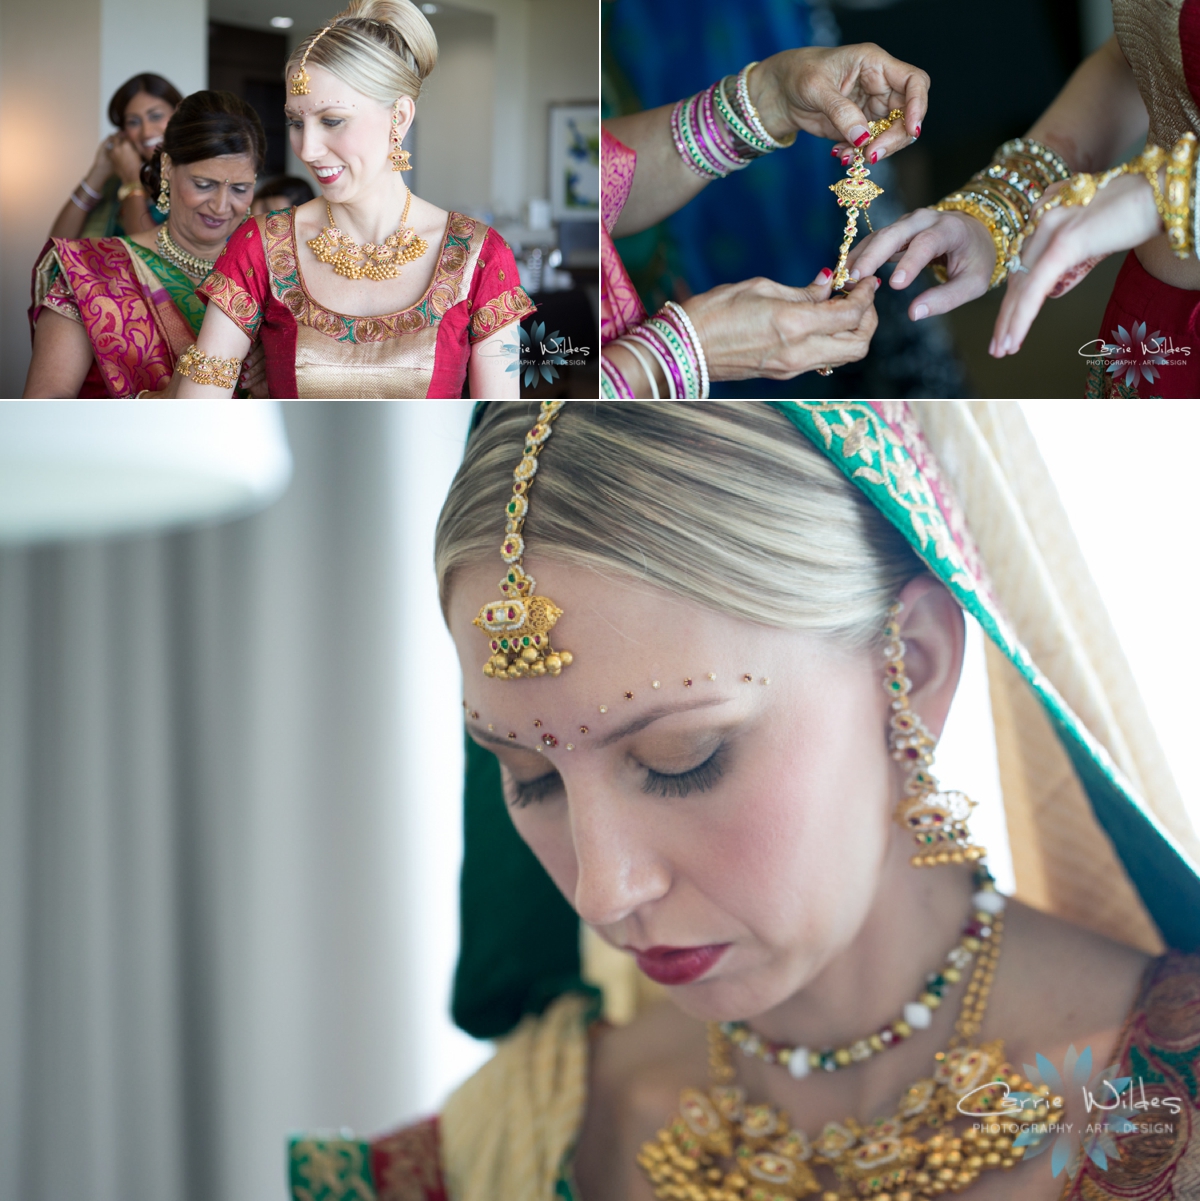 8_17_13 Grand Hyatt Tampa Bay Indian Wedding_0004.jpg